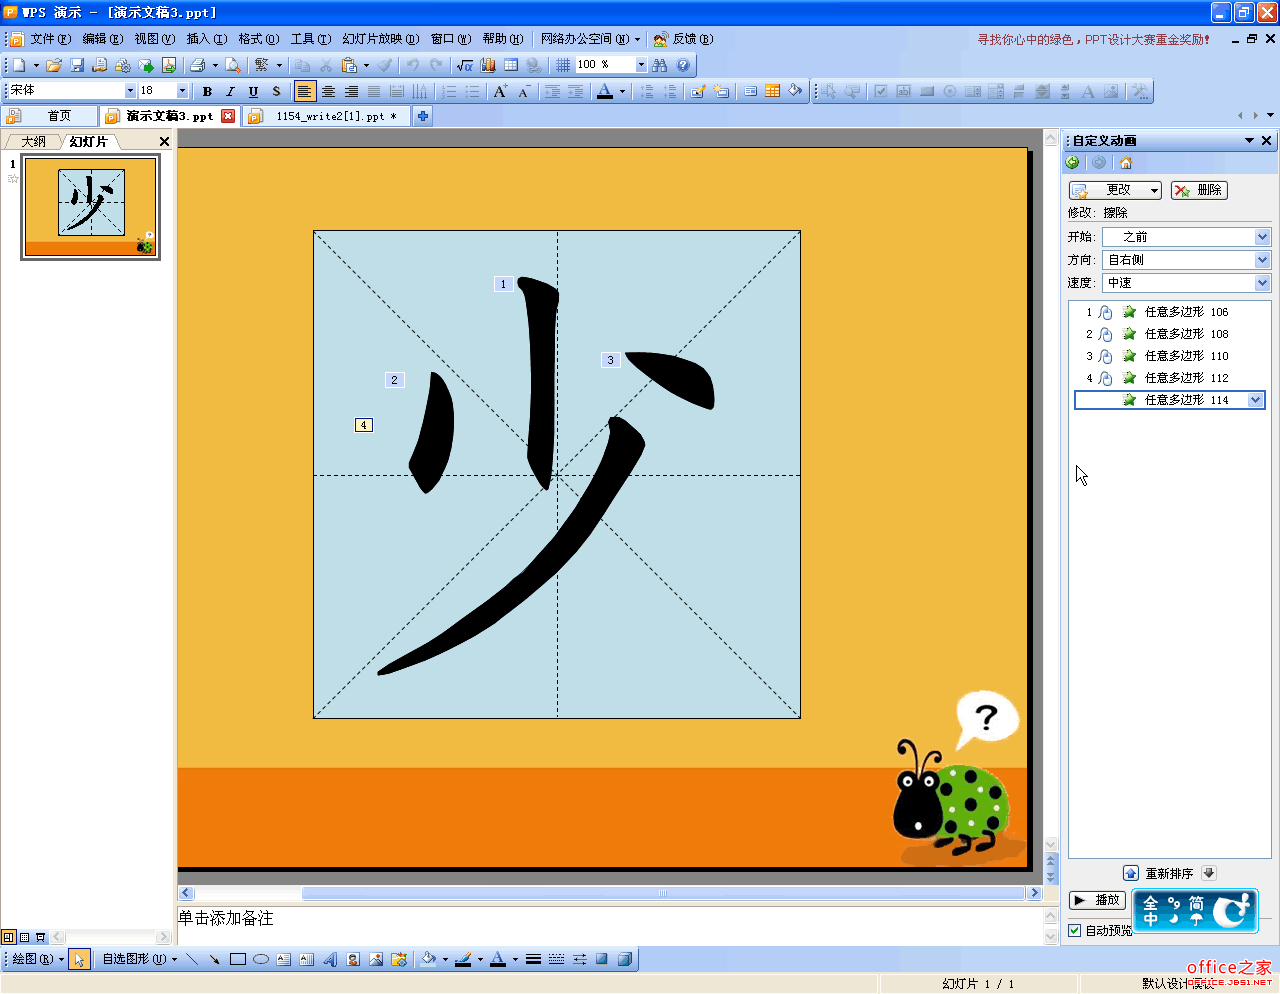 WPS演示利用绘画和自定义动画功能完成汉字